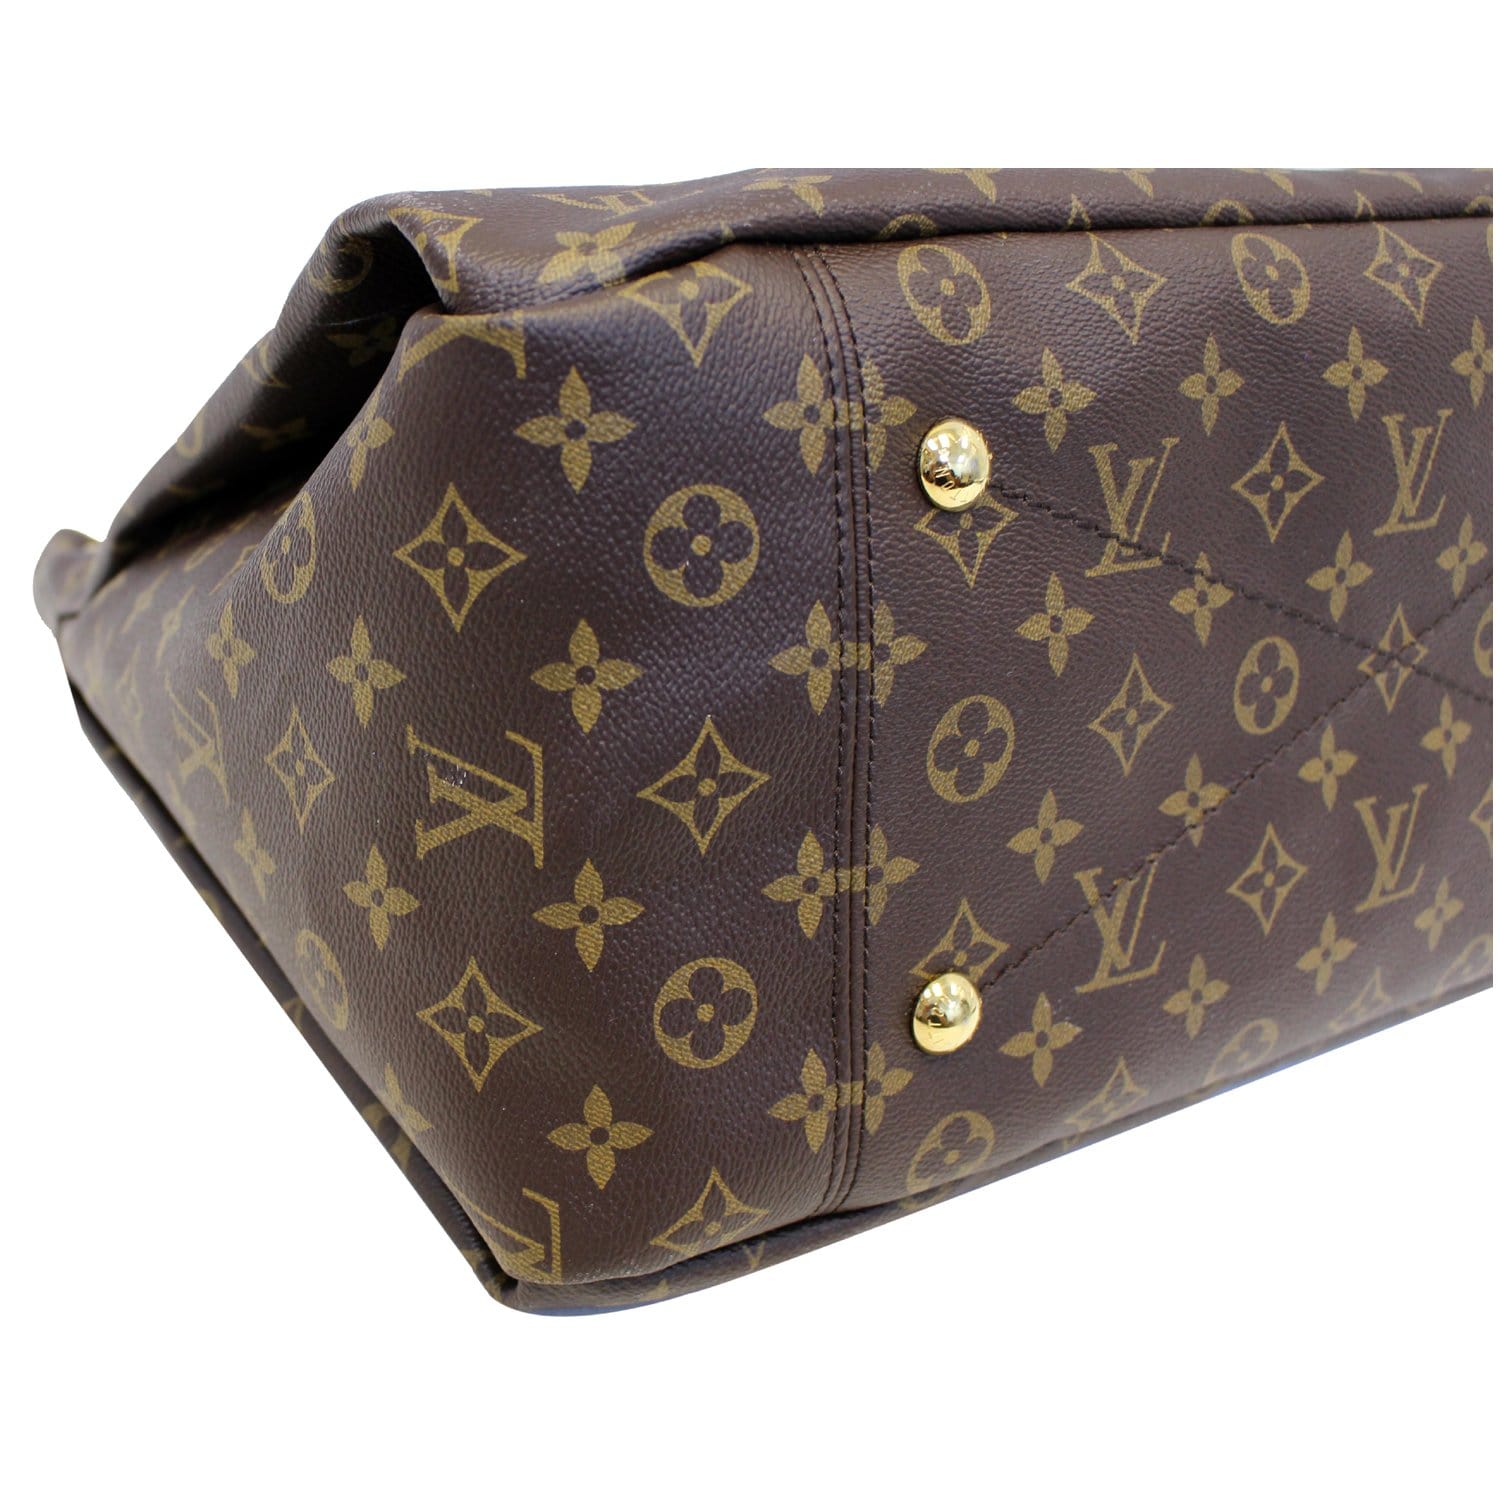 PRELOVED Louis Vuitton Artsy MM Monogram Tote Bag AR2170 092623